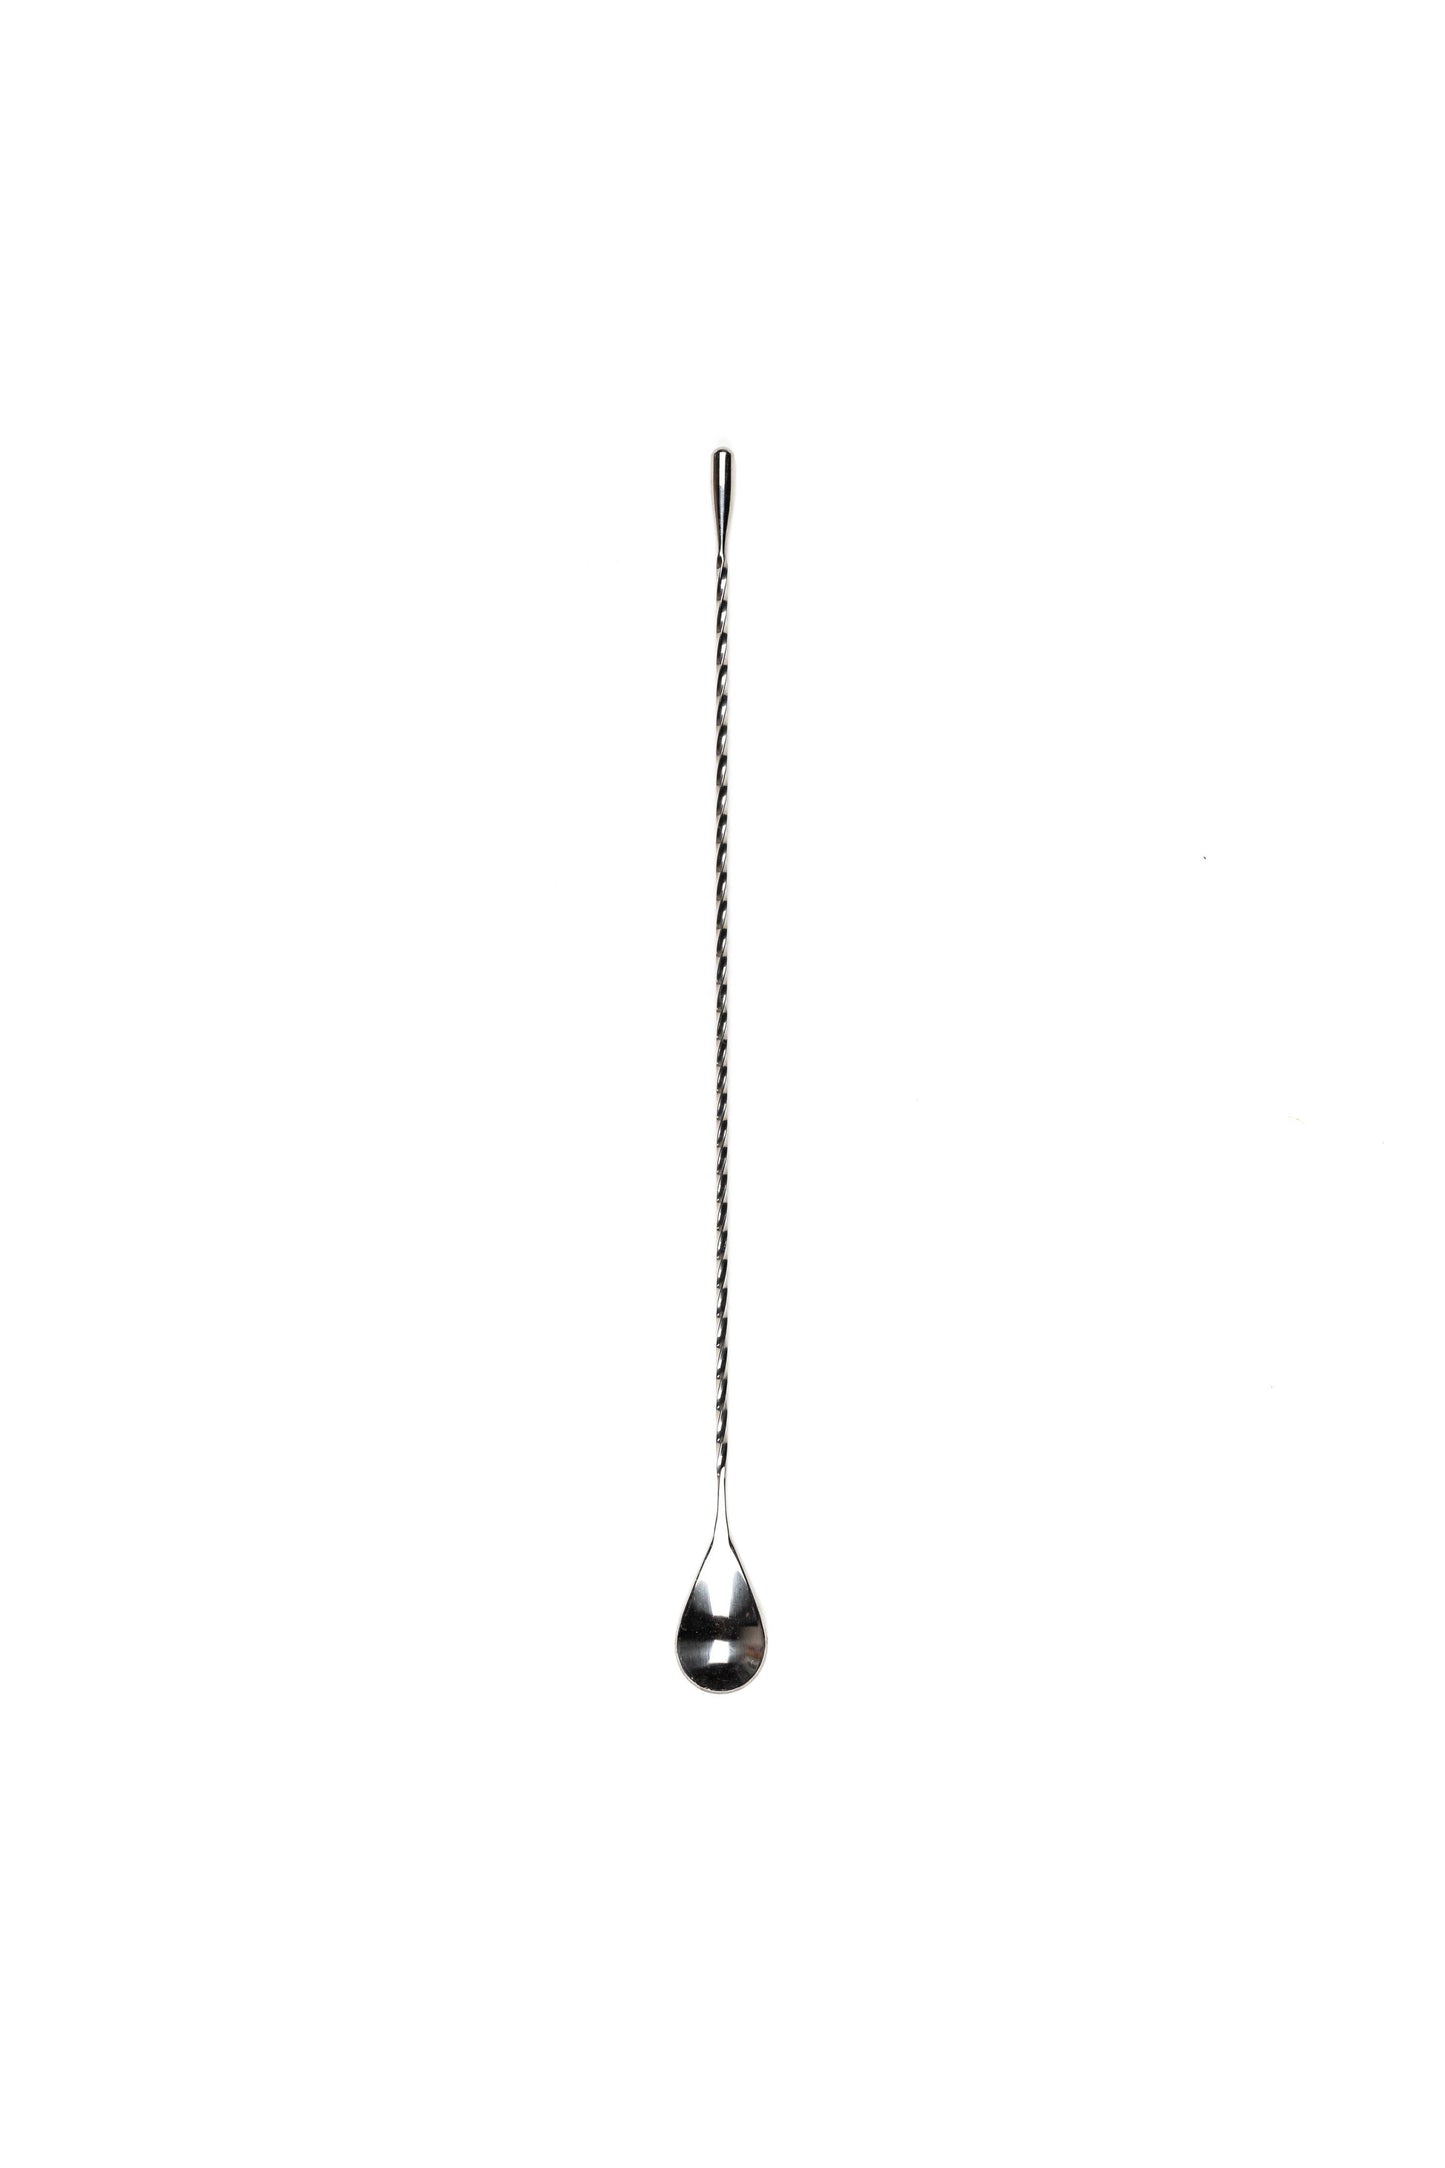 Barspoon - Teardrop Silver (16"/40cm Length)